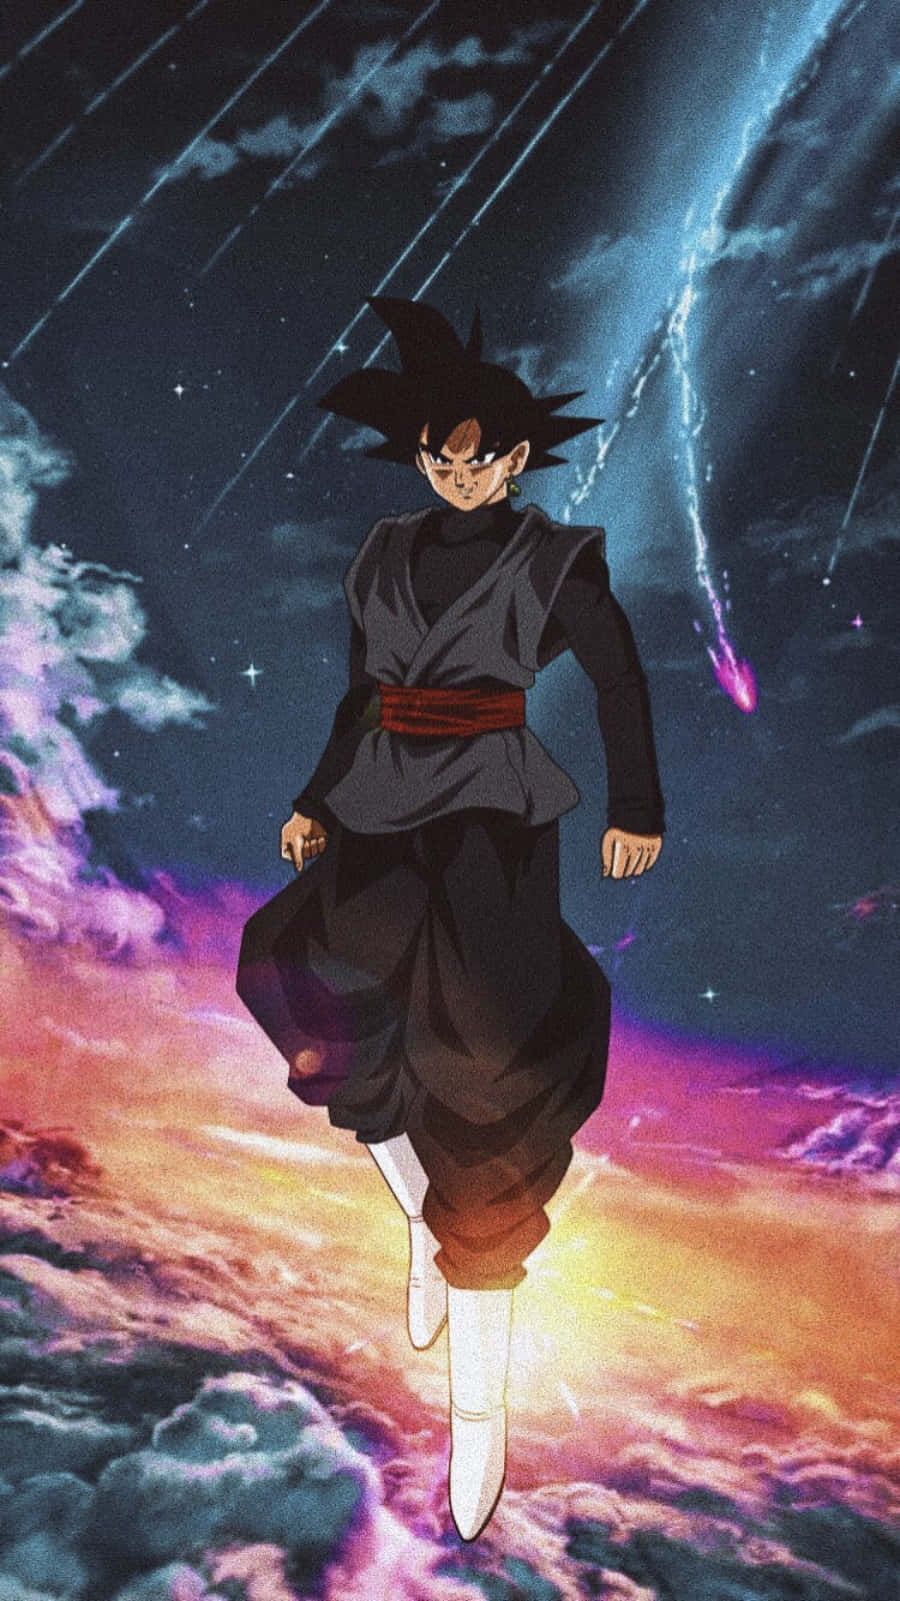 Goku Black from Dragon Ball Super